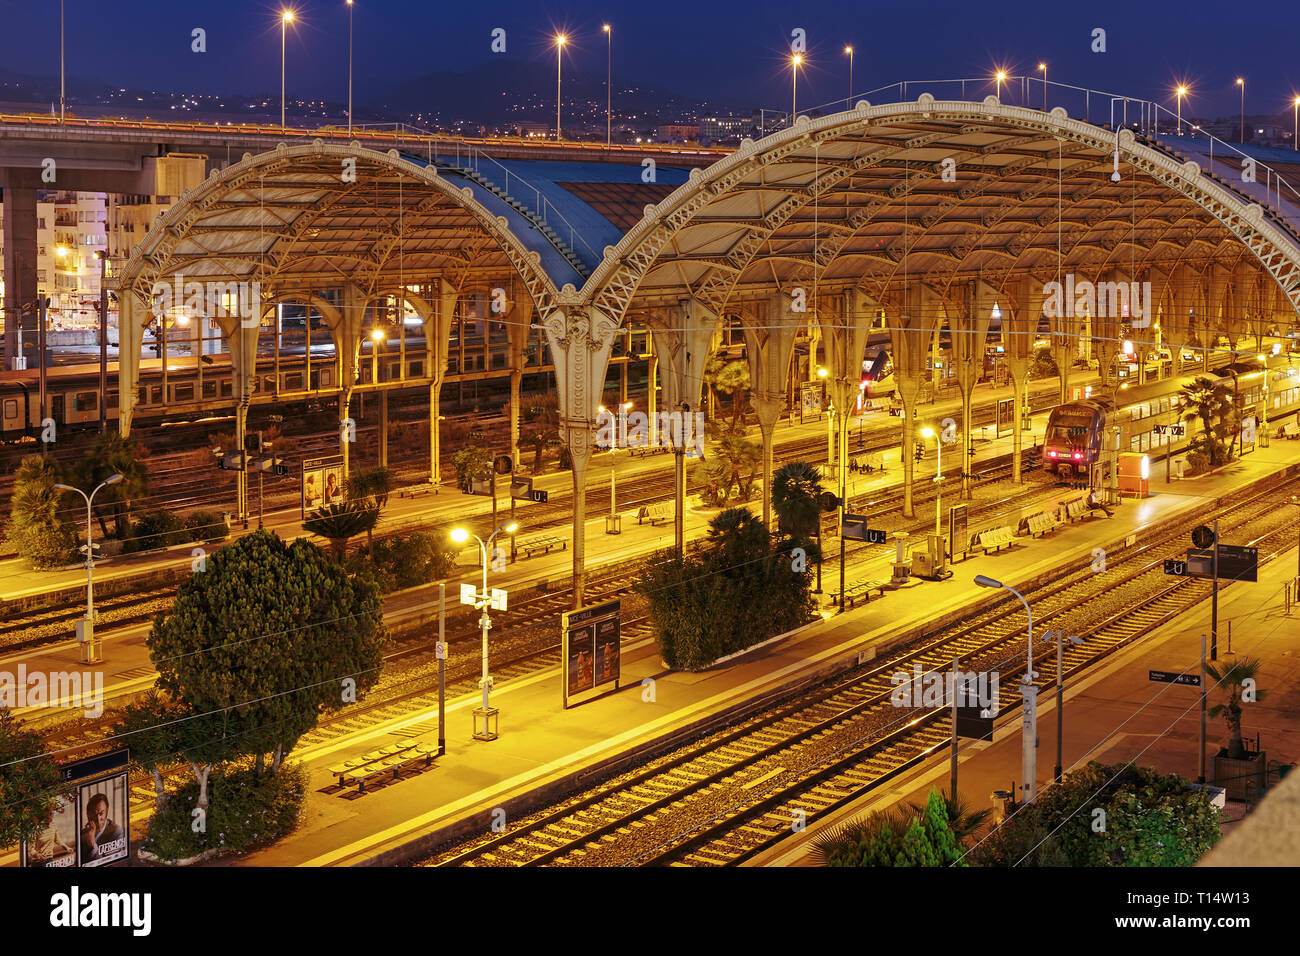 NICE, FRANCE - NOVEMBER 2, 2014: Railway Station In Nice at night Stock Photo